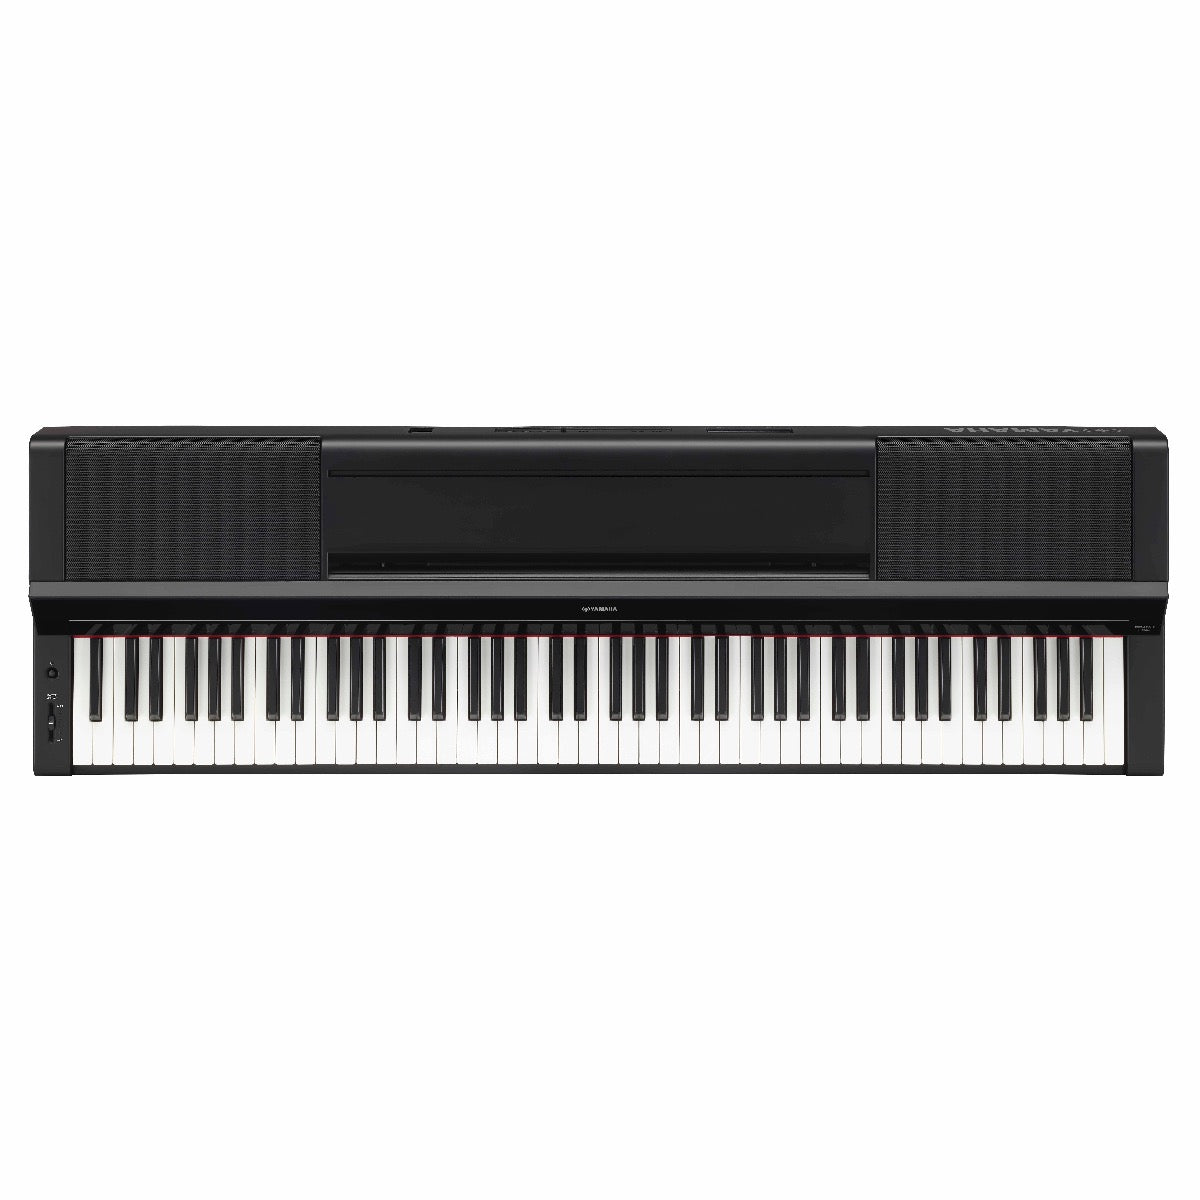 Yamaha P-S500 Digital Piano - Black, View 3